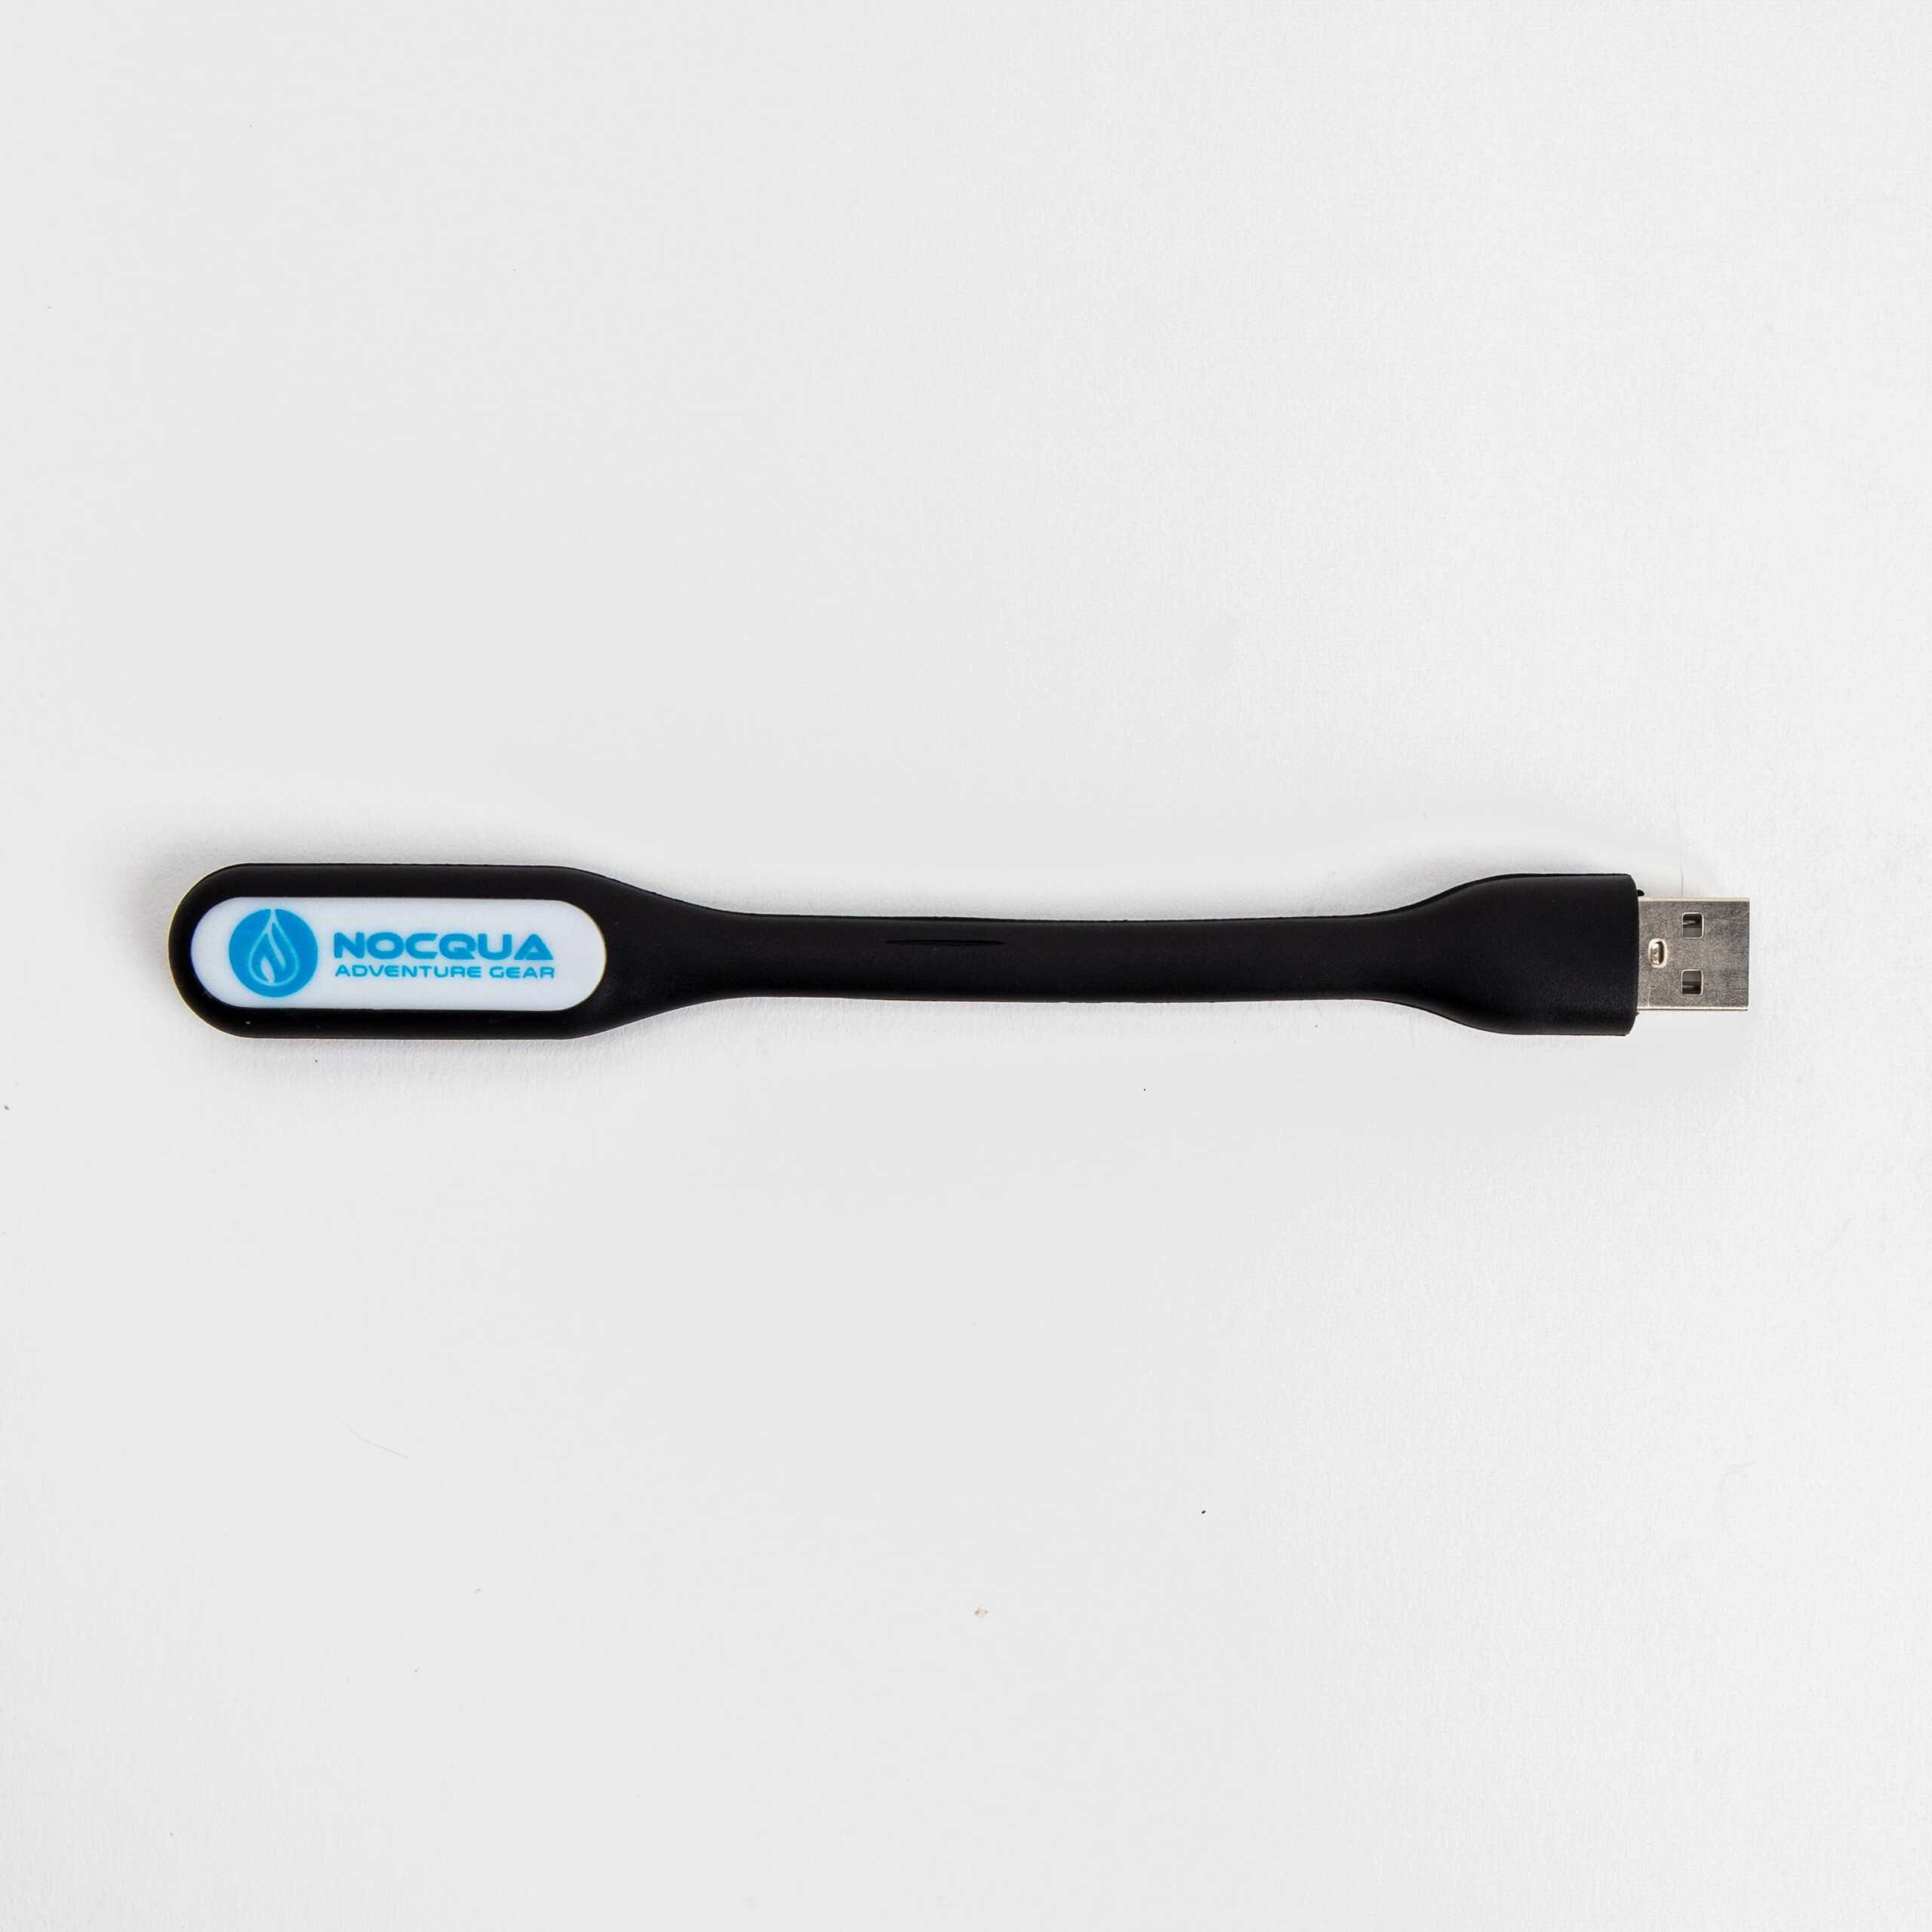 USB Flex Light – NOCQUA Adventure Gear